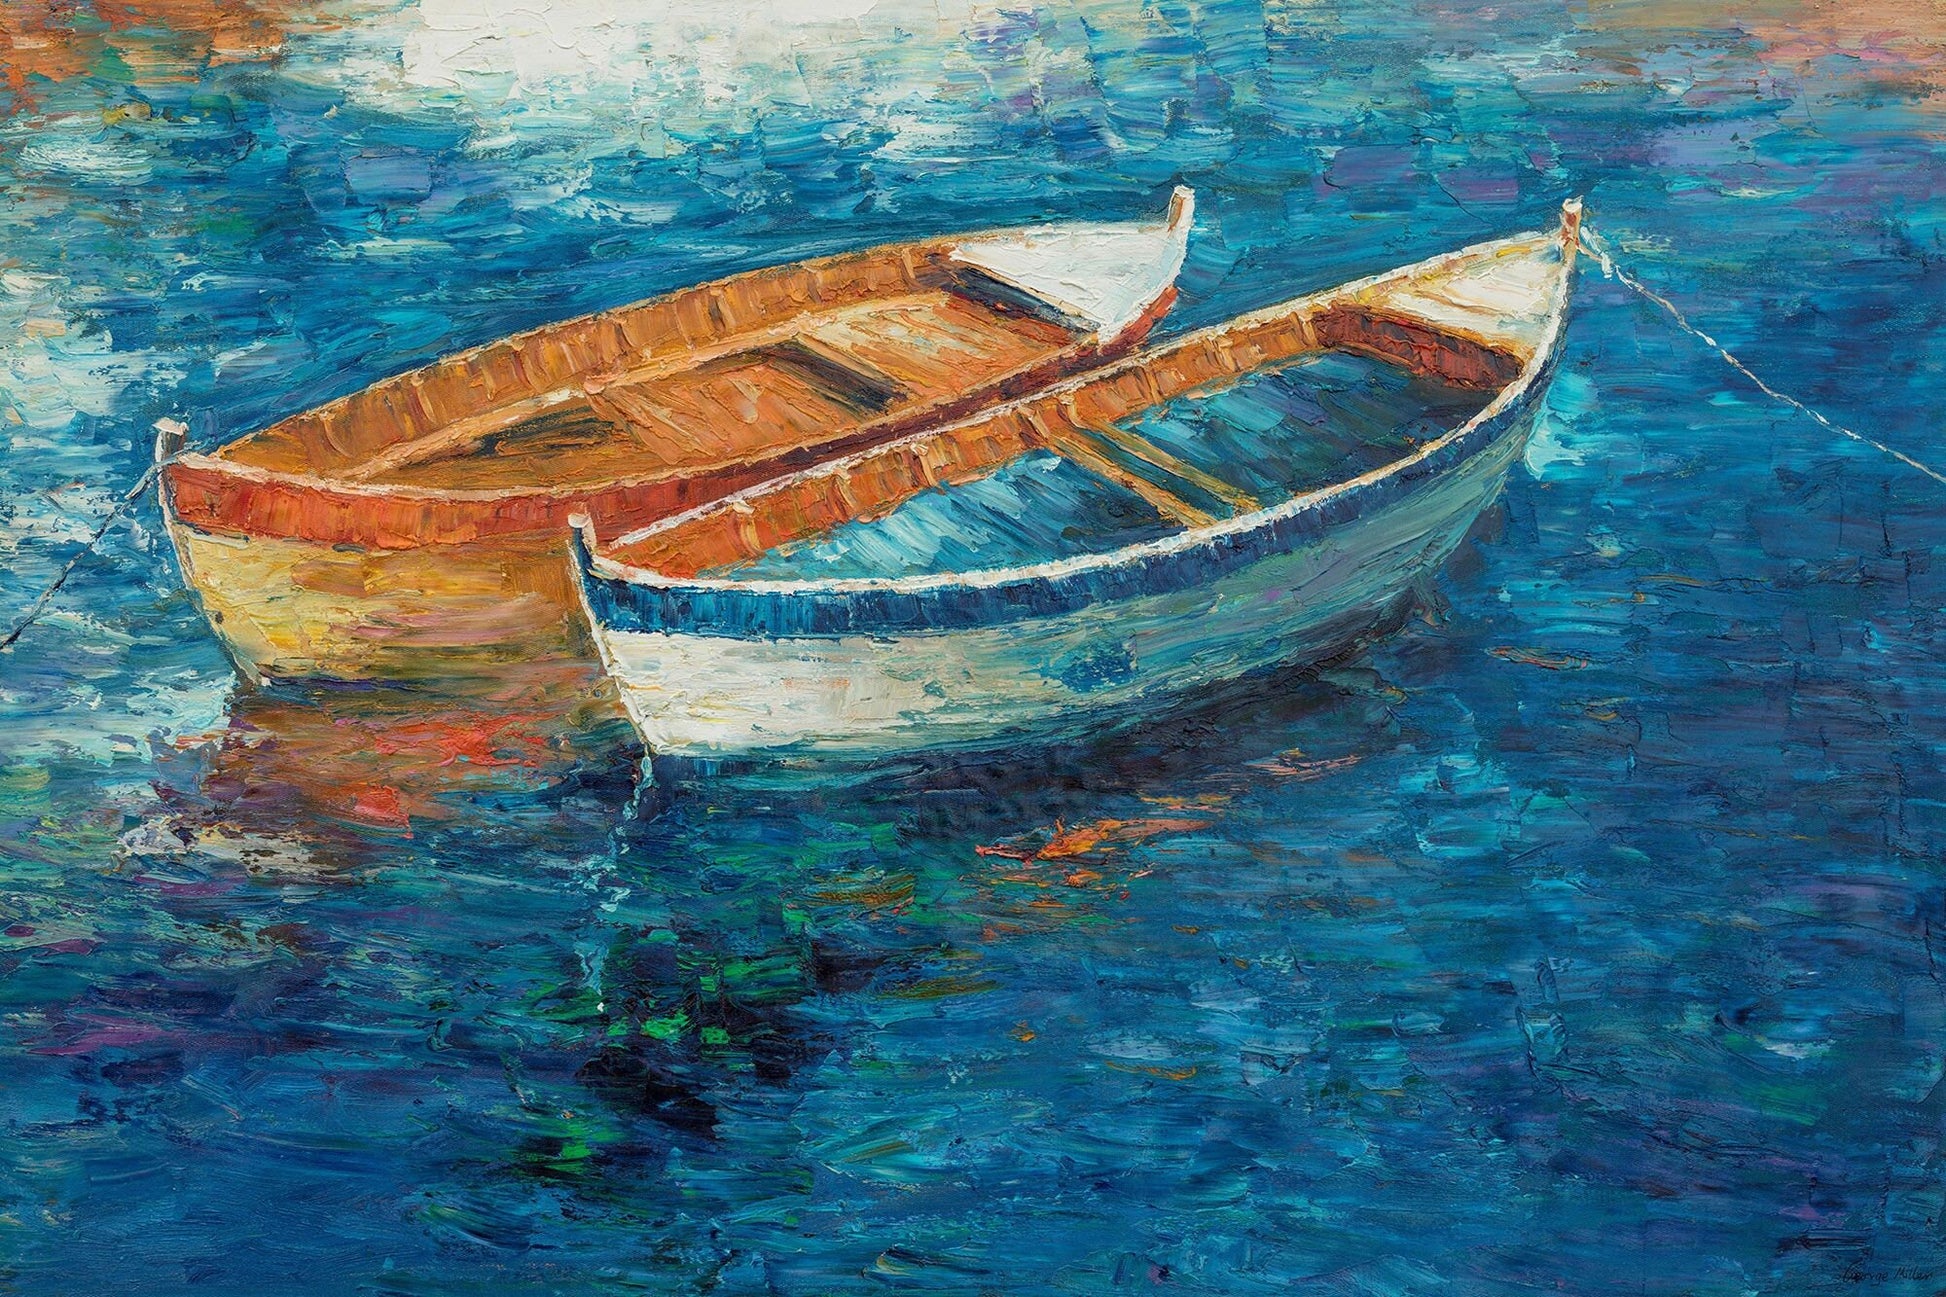 Oil Painting, Original Painting, Fishing Boat, Seascape Painting, Abstract Oil Painting, Large Abstract Painting, Kitchen Art, Modern Art